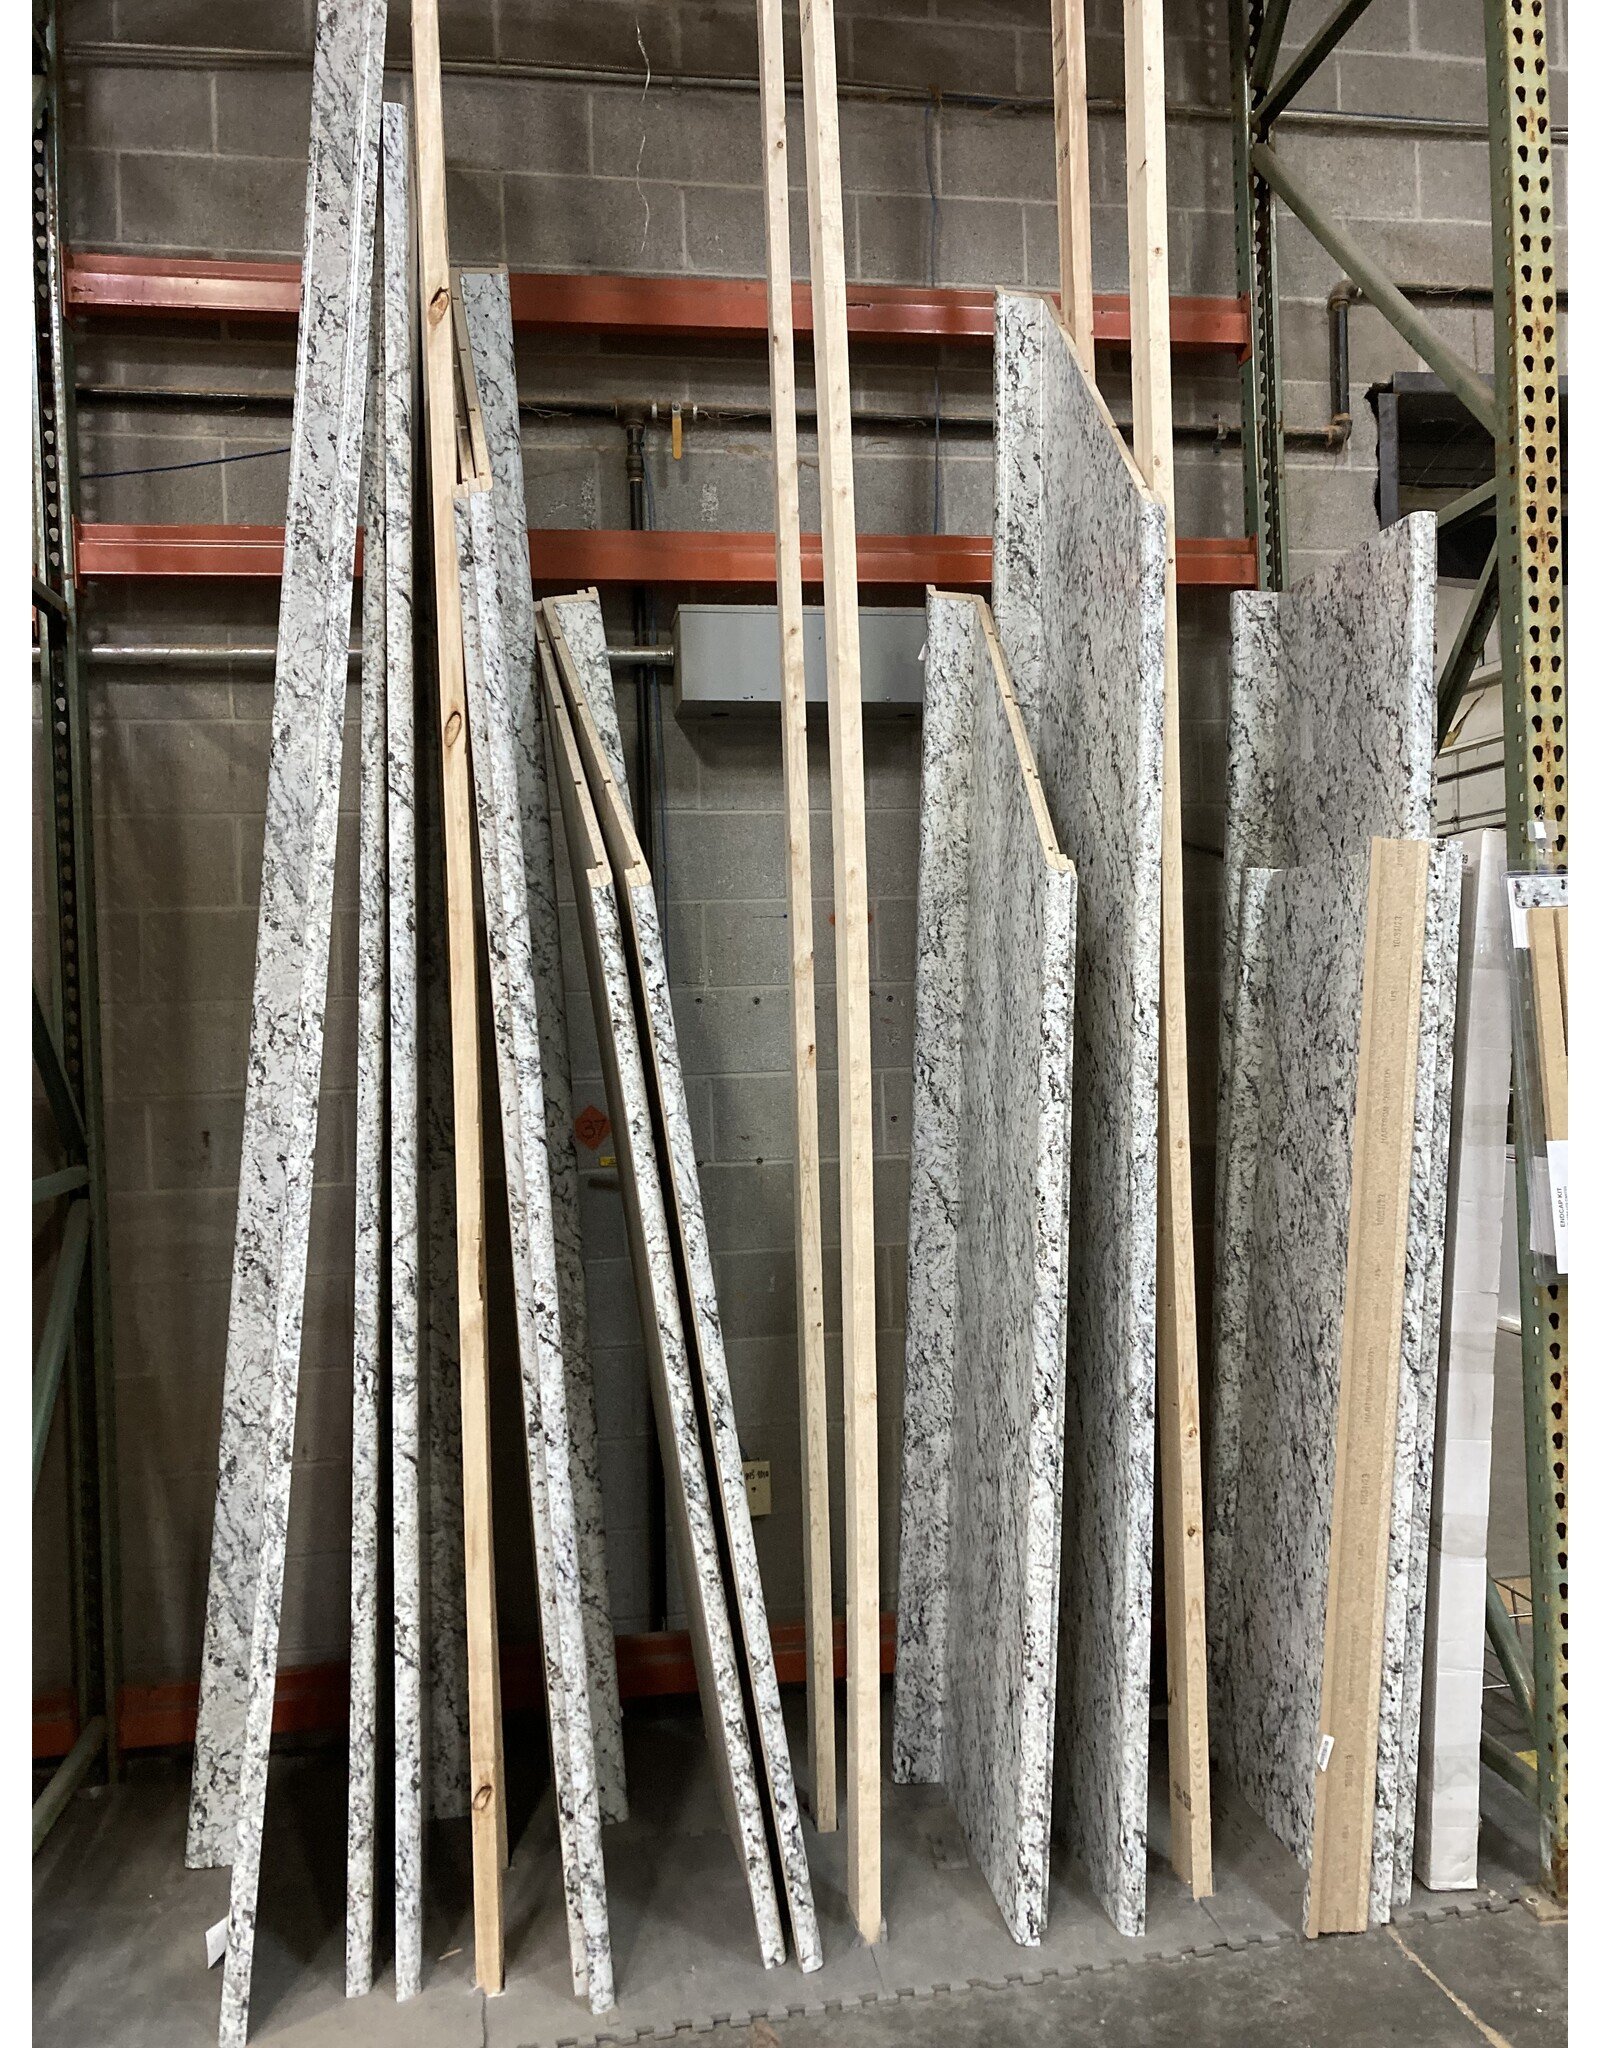 HKC Laminate Countertop 9476-43 White Ice Granite 25.25x120 Right Miter (10ft)